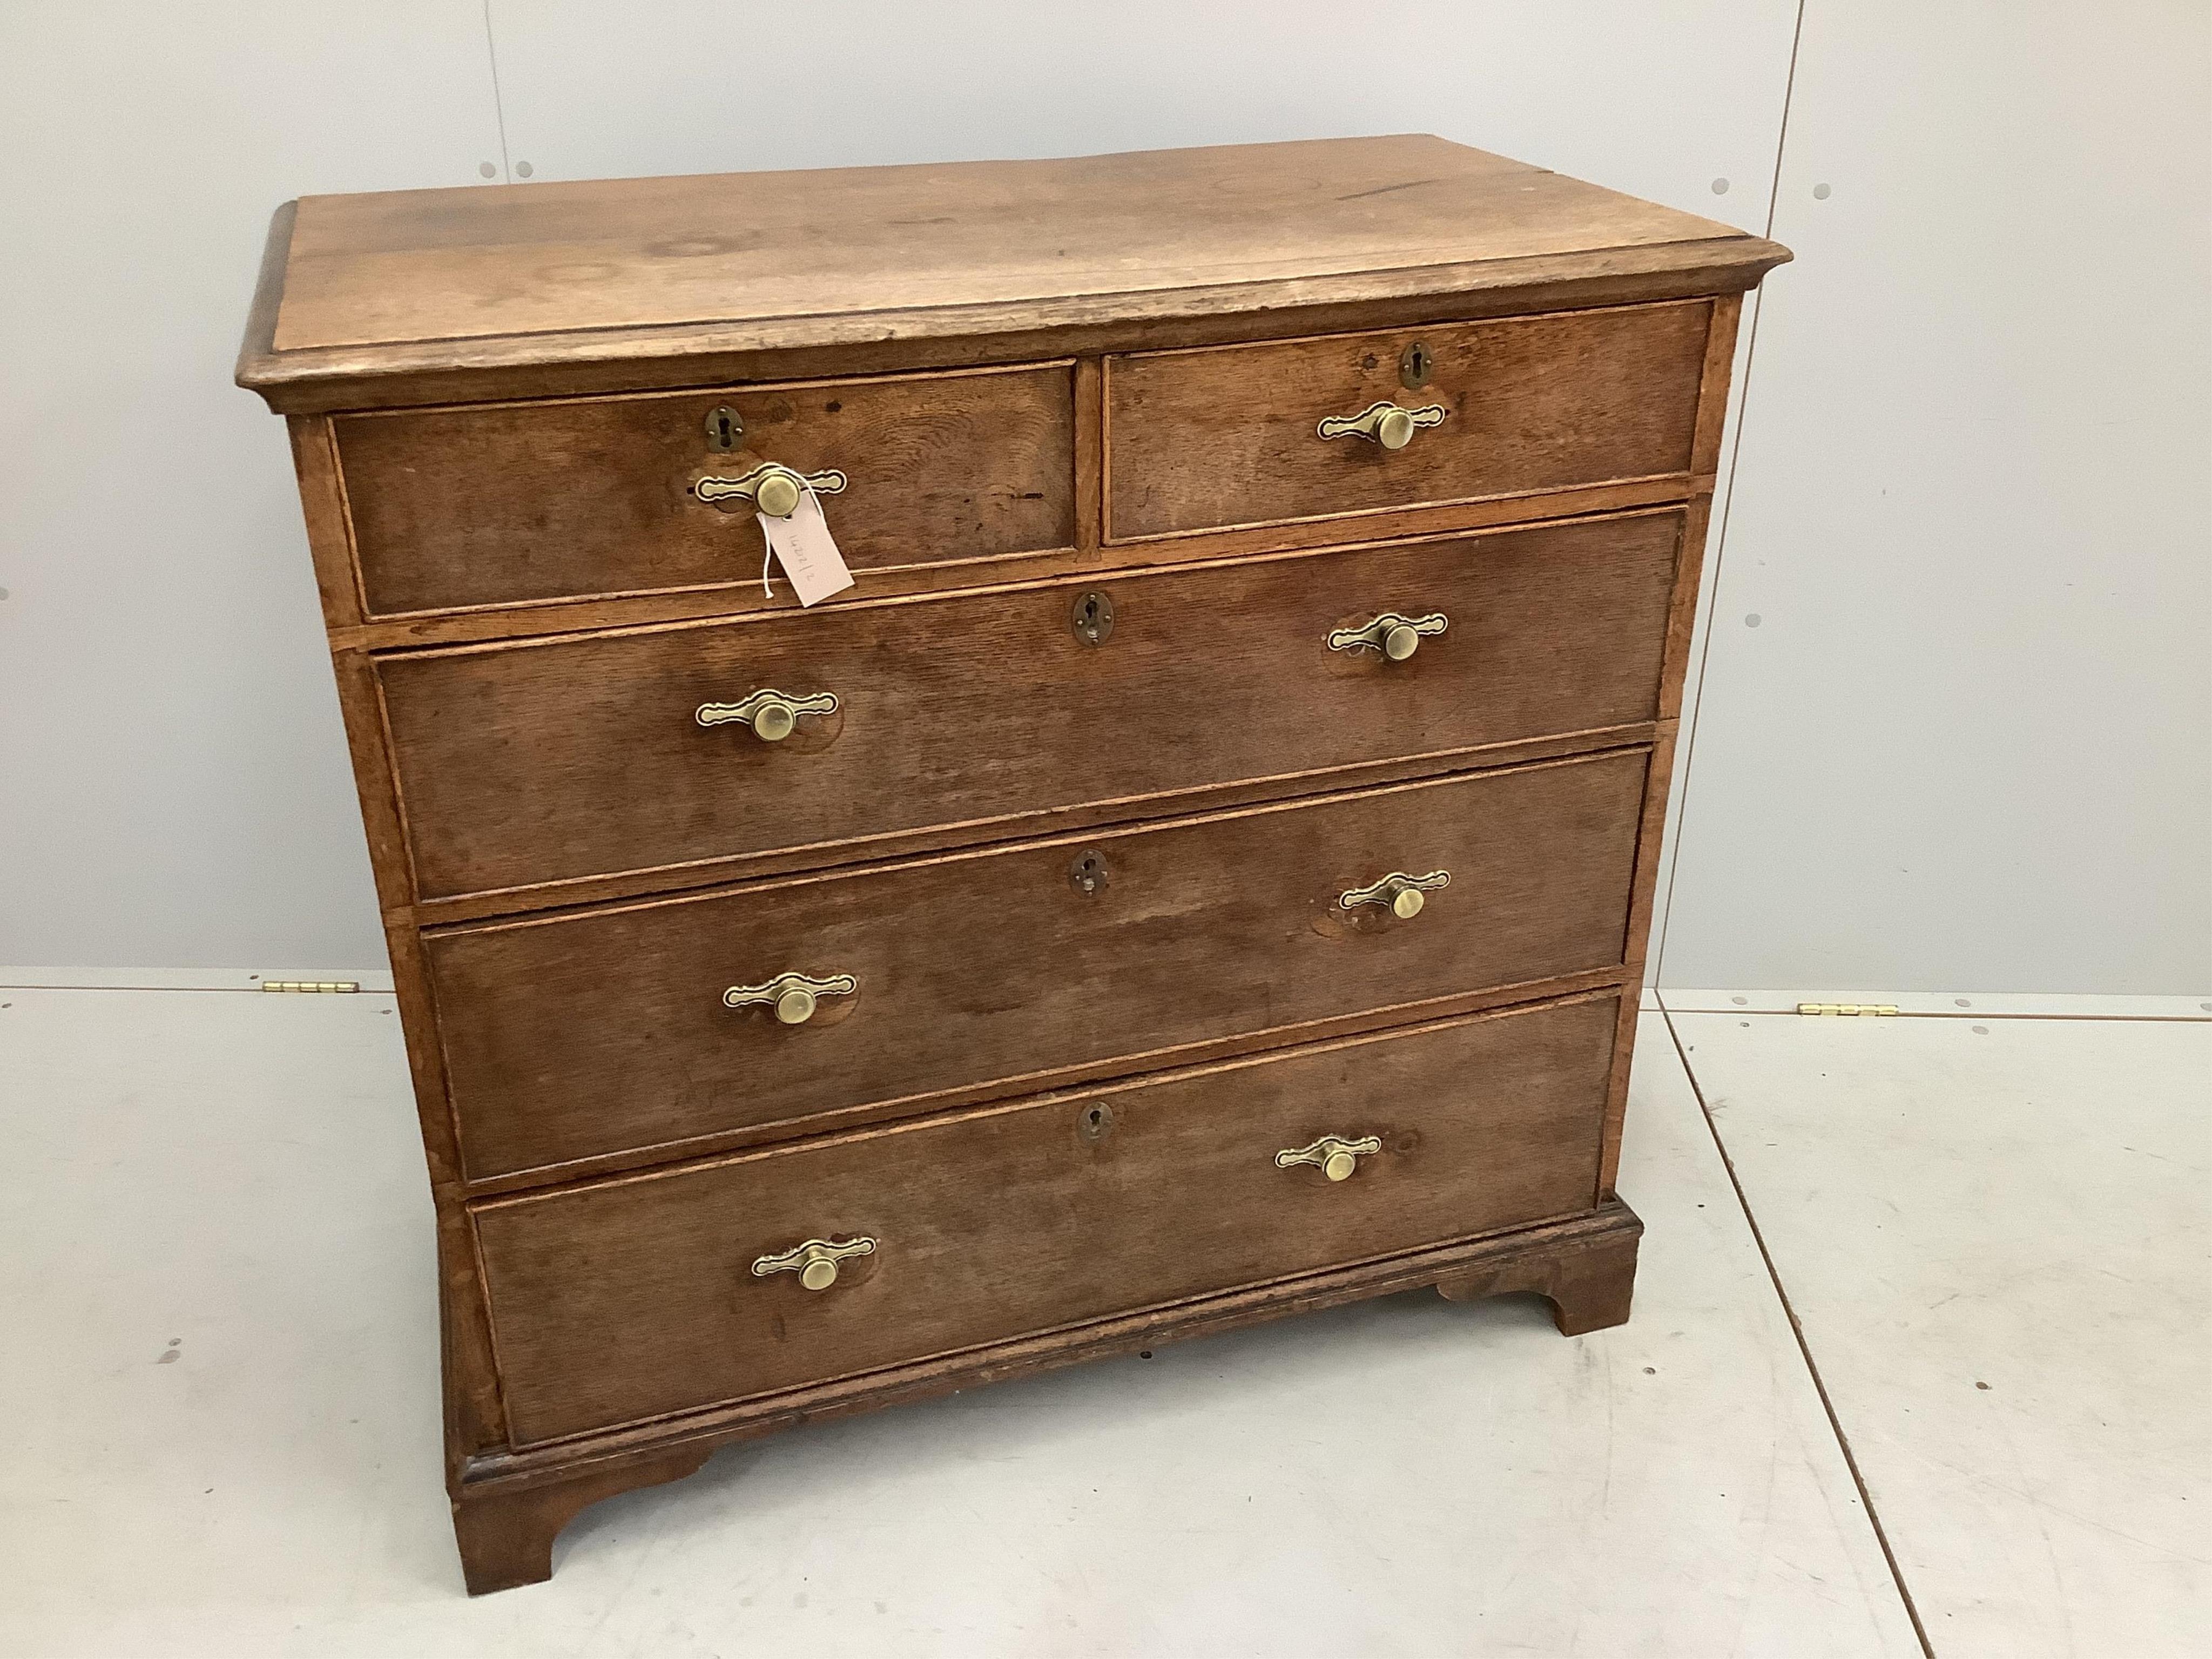 A George III oak chest of drawers, width 100cm, depth 52cm, height 95cm